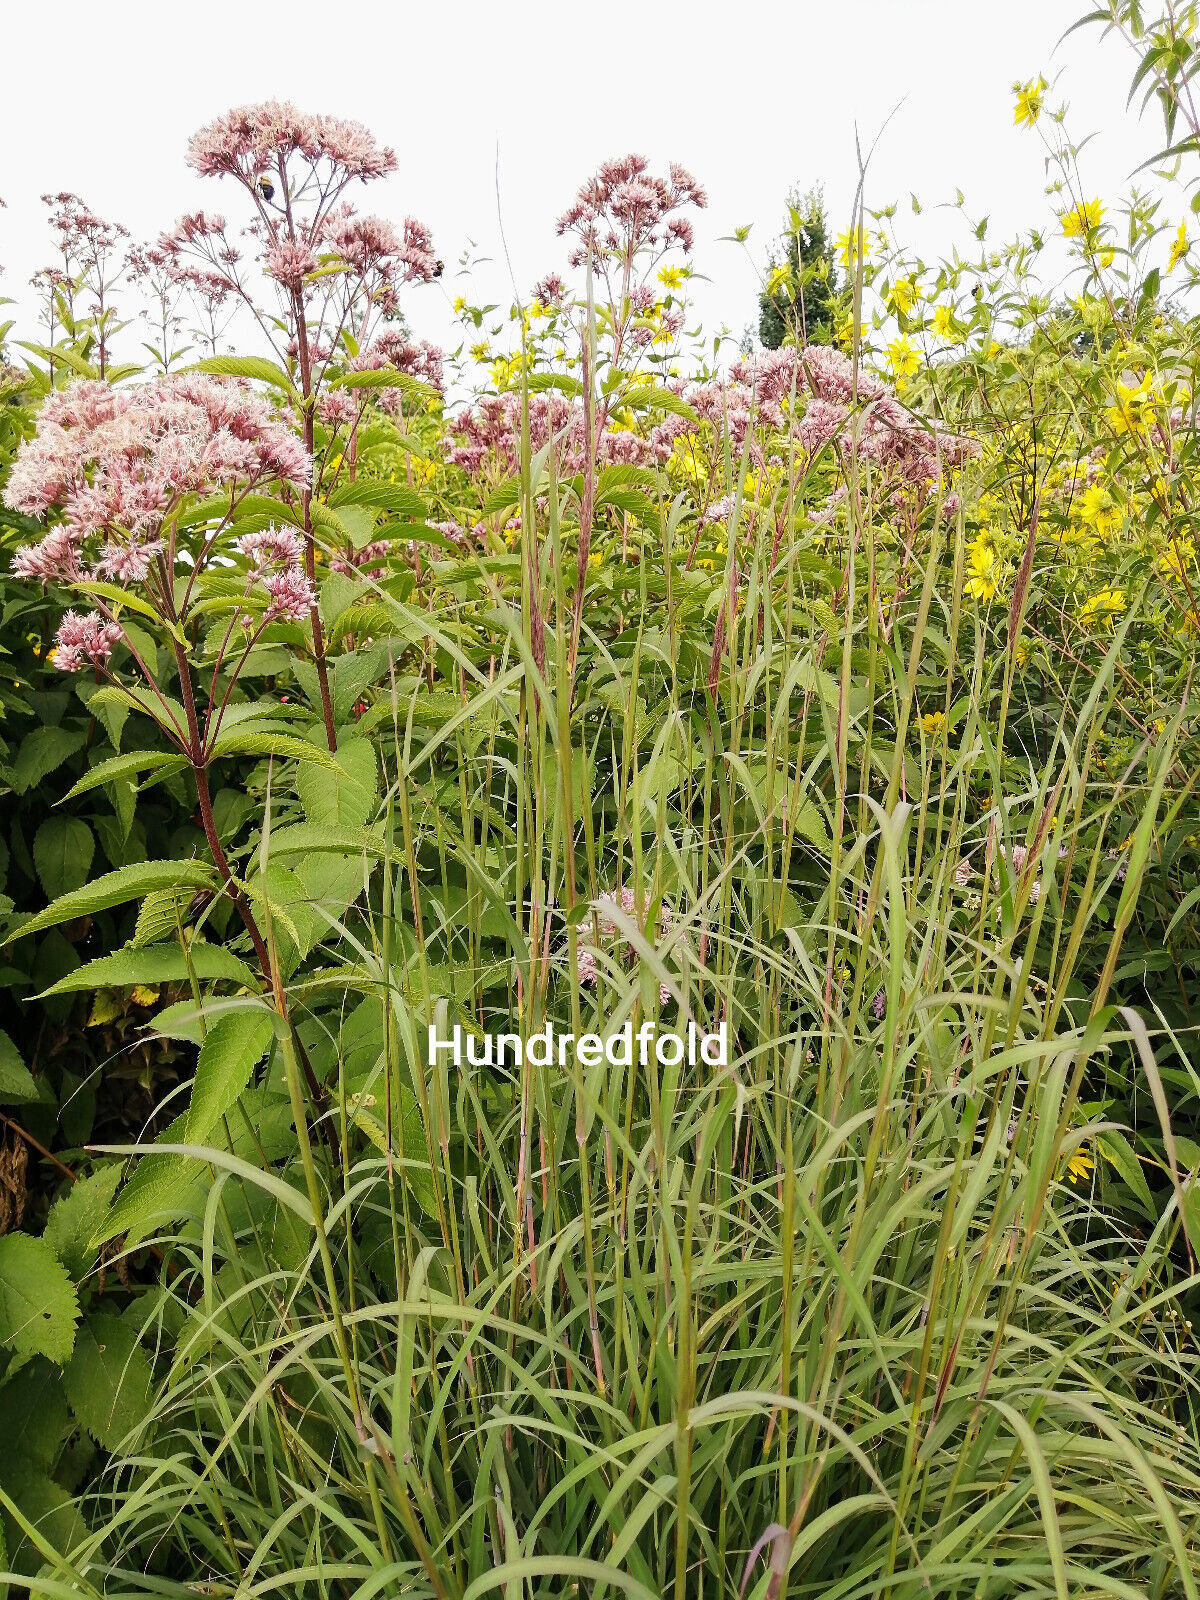 Hundredfold 500 Switchgrass Switch Grass Seeds - Panicum virgatum Ornamental Bunch Grasses, Attract Birds, Valued for Native Garden & Wildflower Meadow